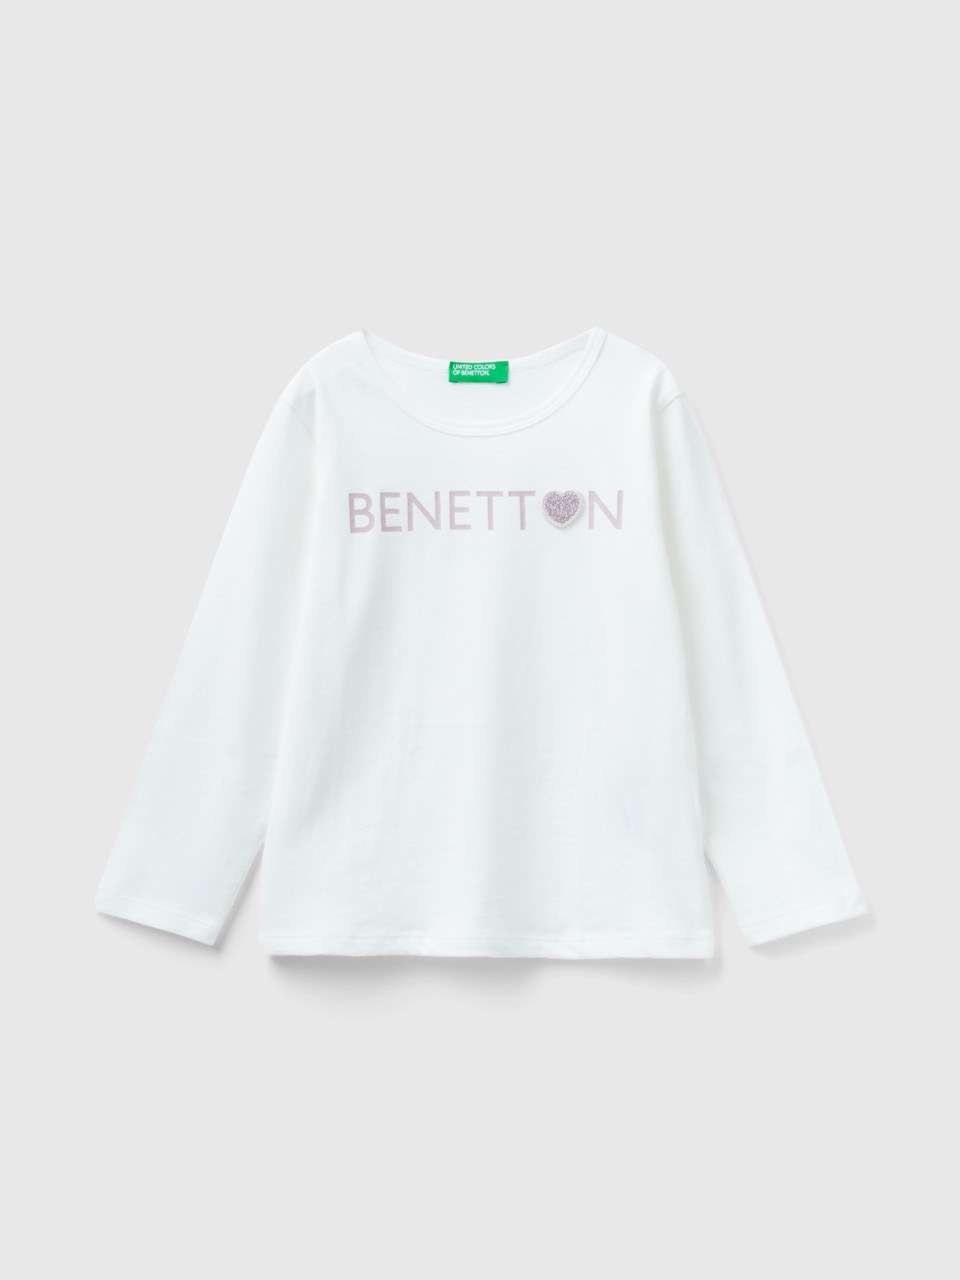 Benetton, Organic Cotton T-shirt With Glittery Print, Creamy White, Kids